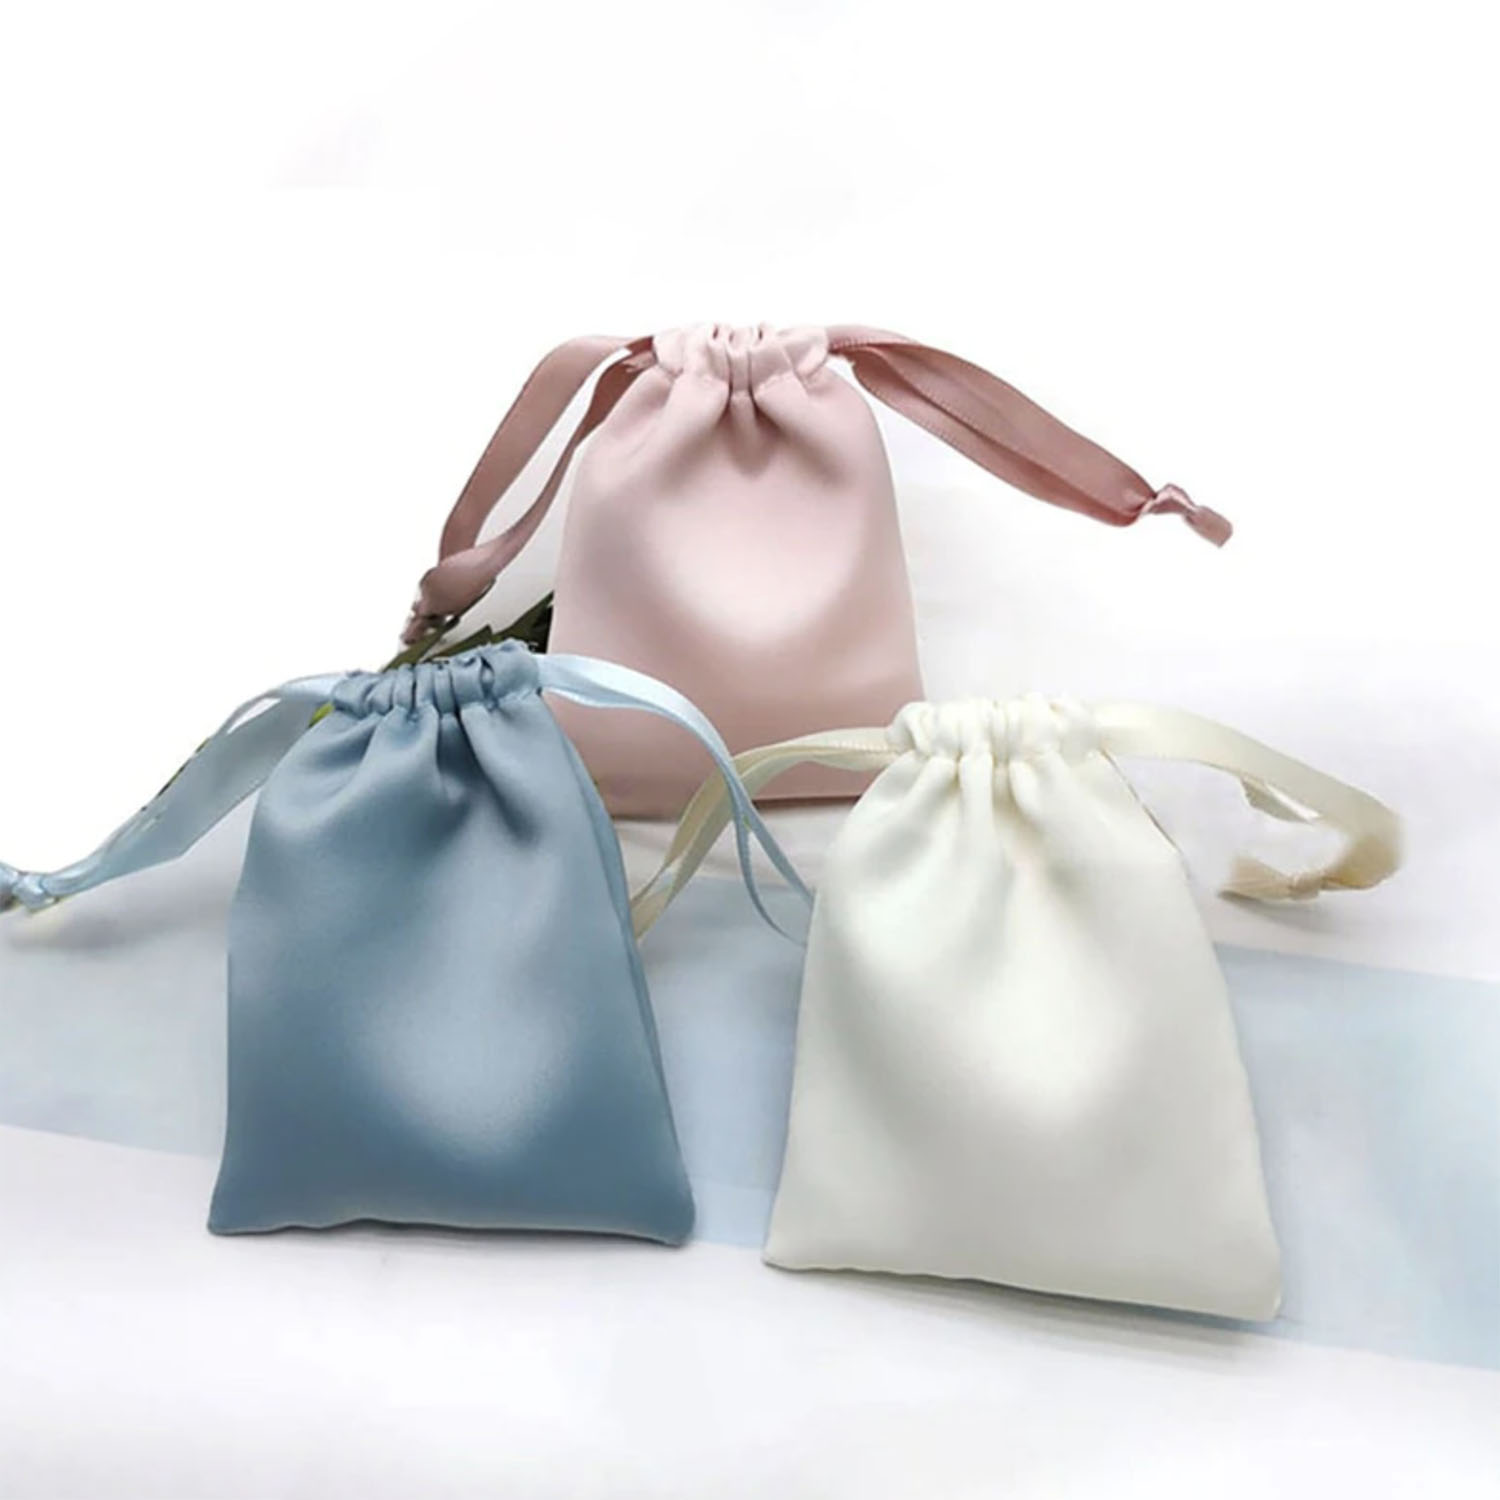 Satin Jewelry Drawstring Bag From Thai Bag Factory